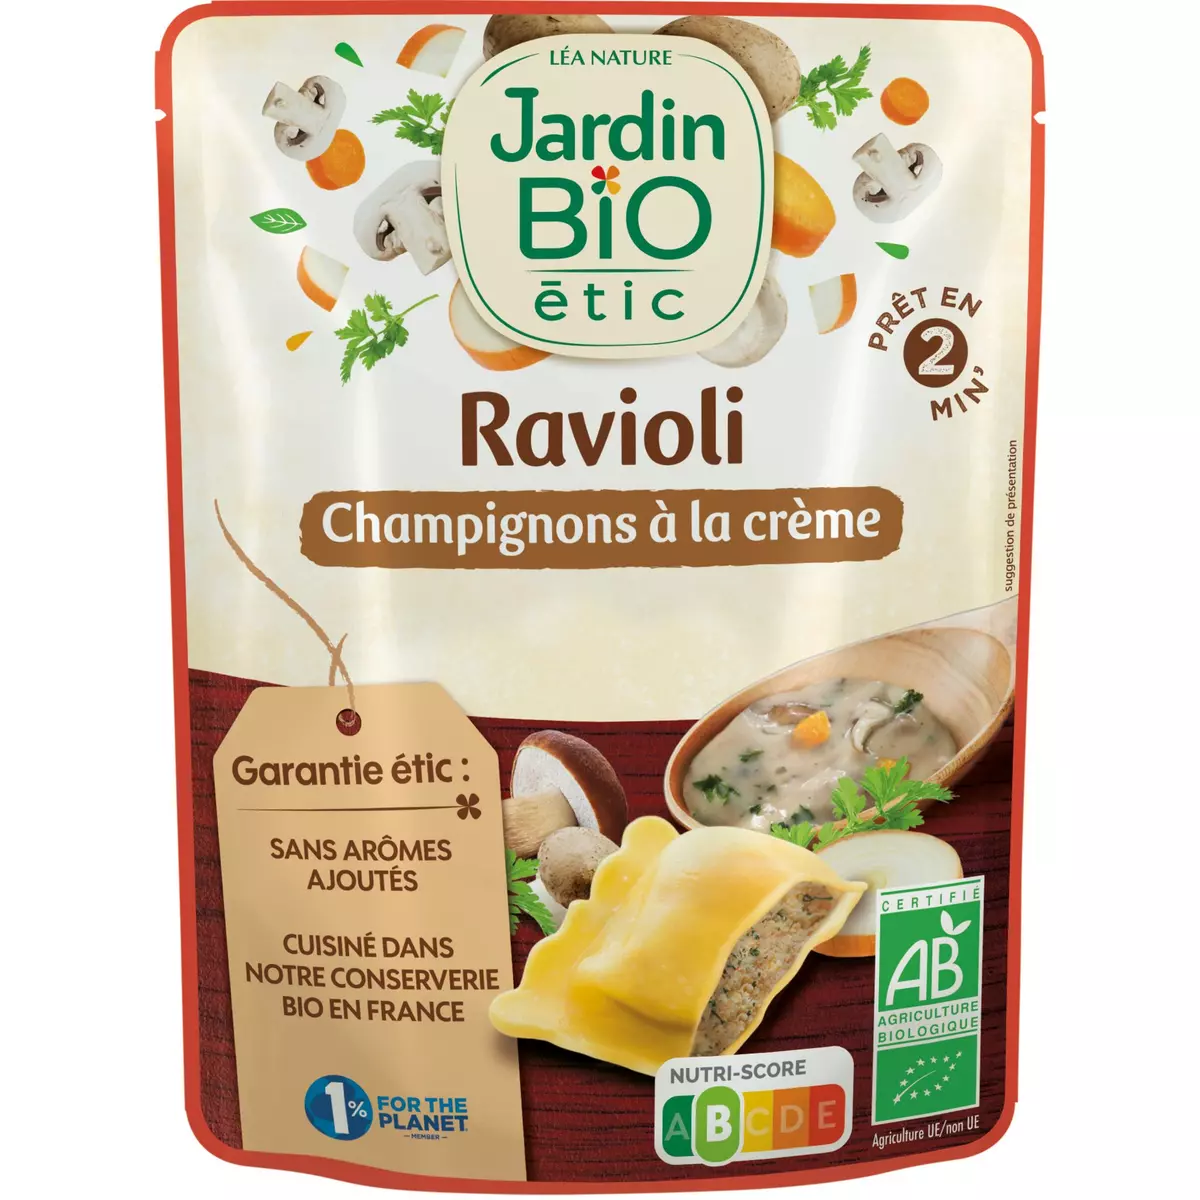 JARDIN BIO ETIC Ravioli champignons à la crème sachet express 250g